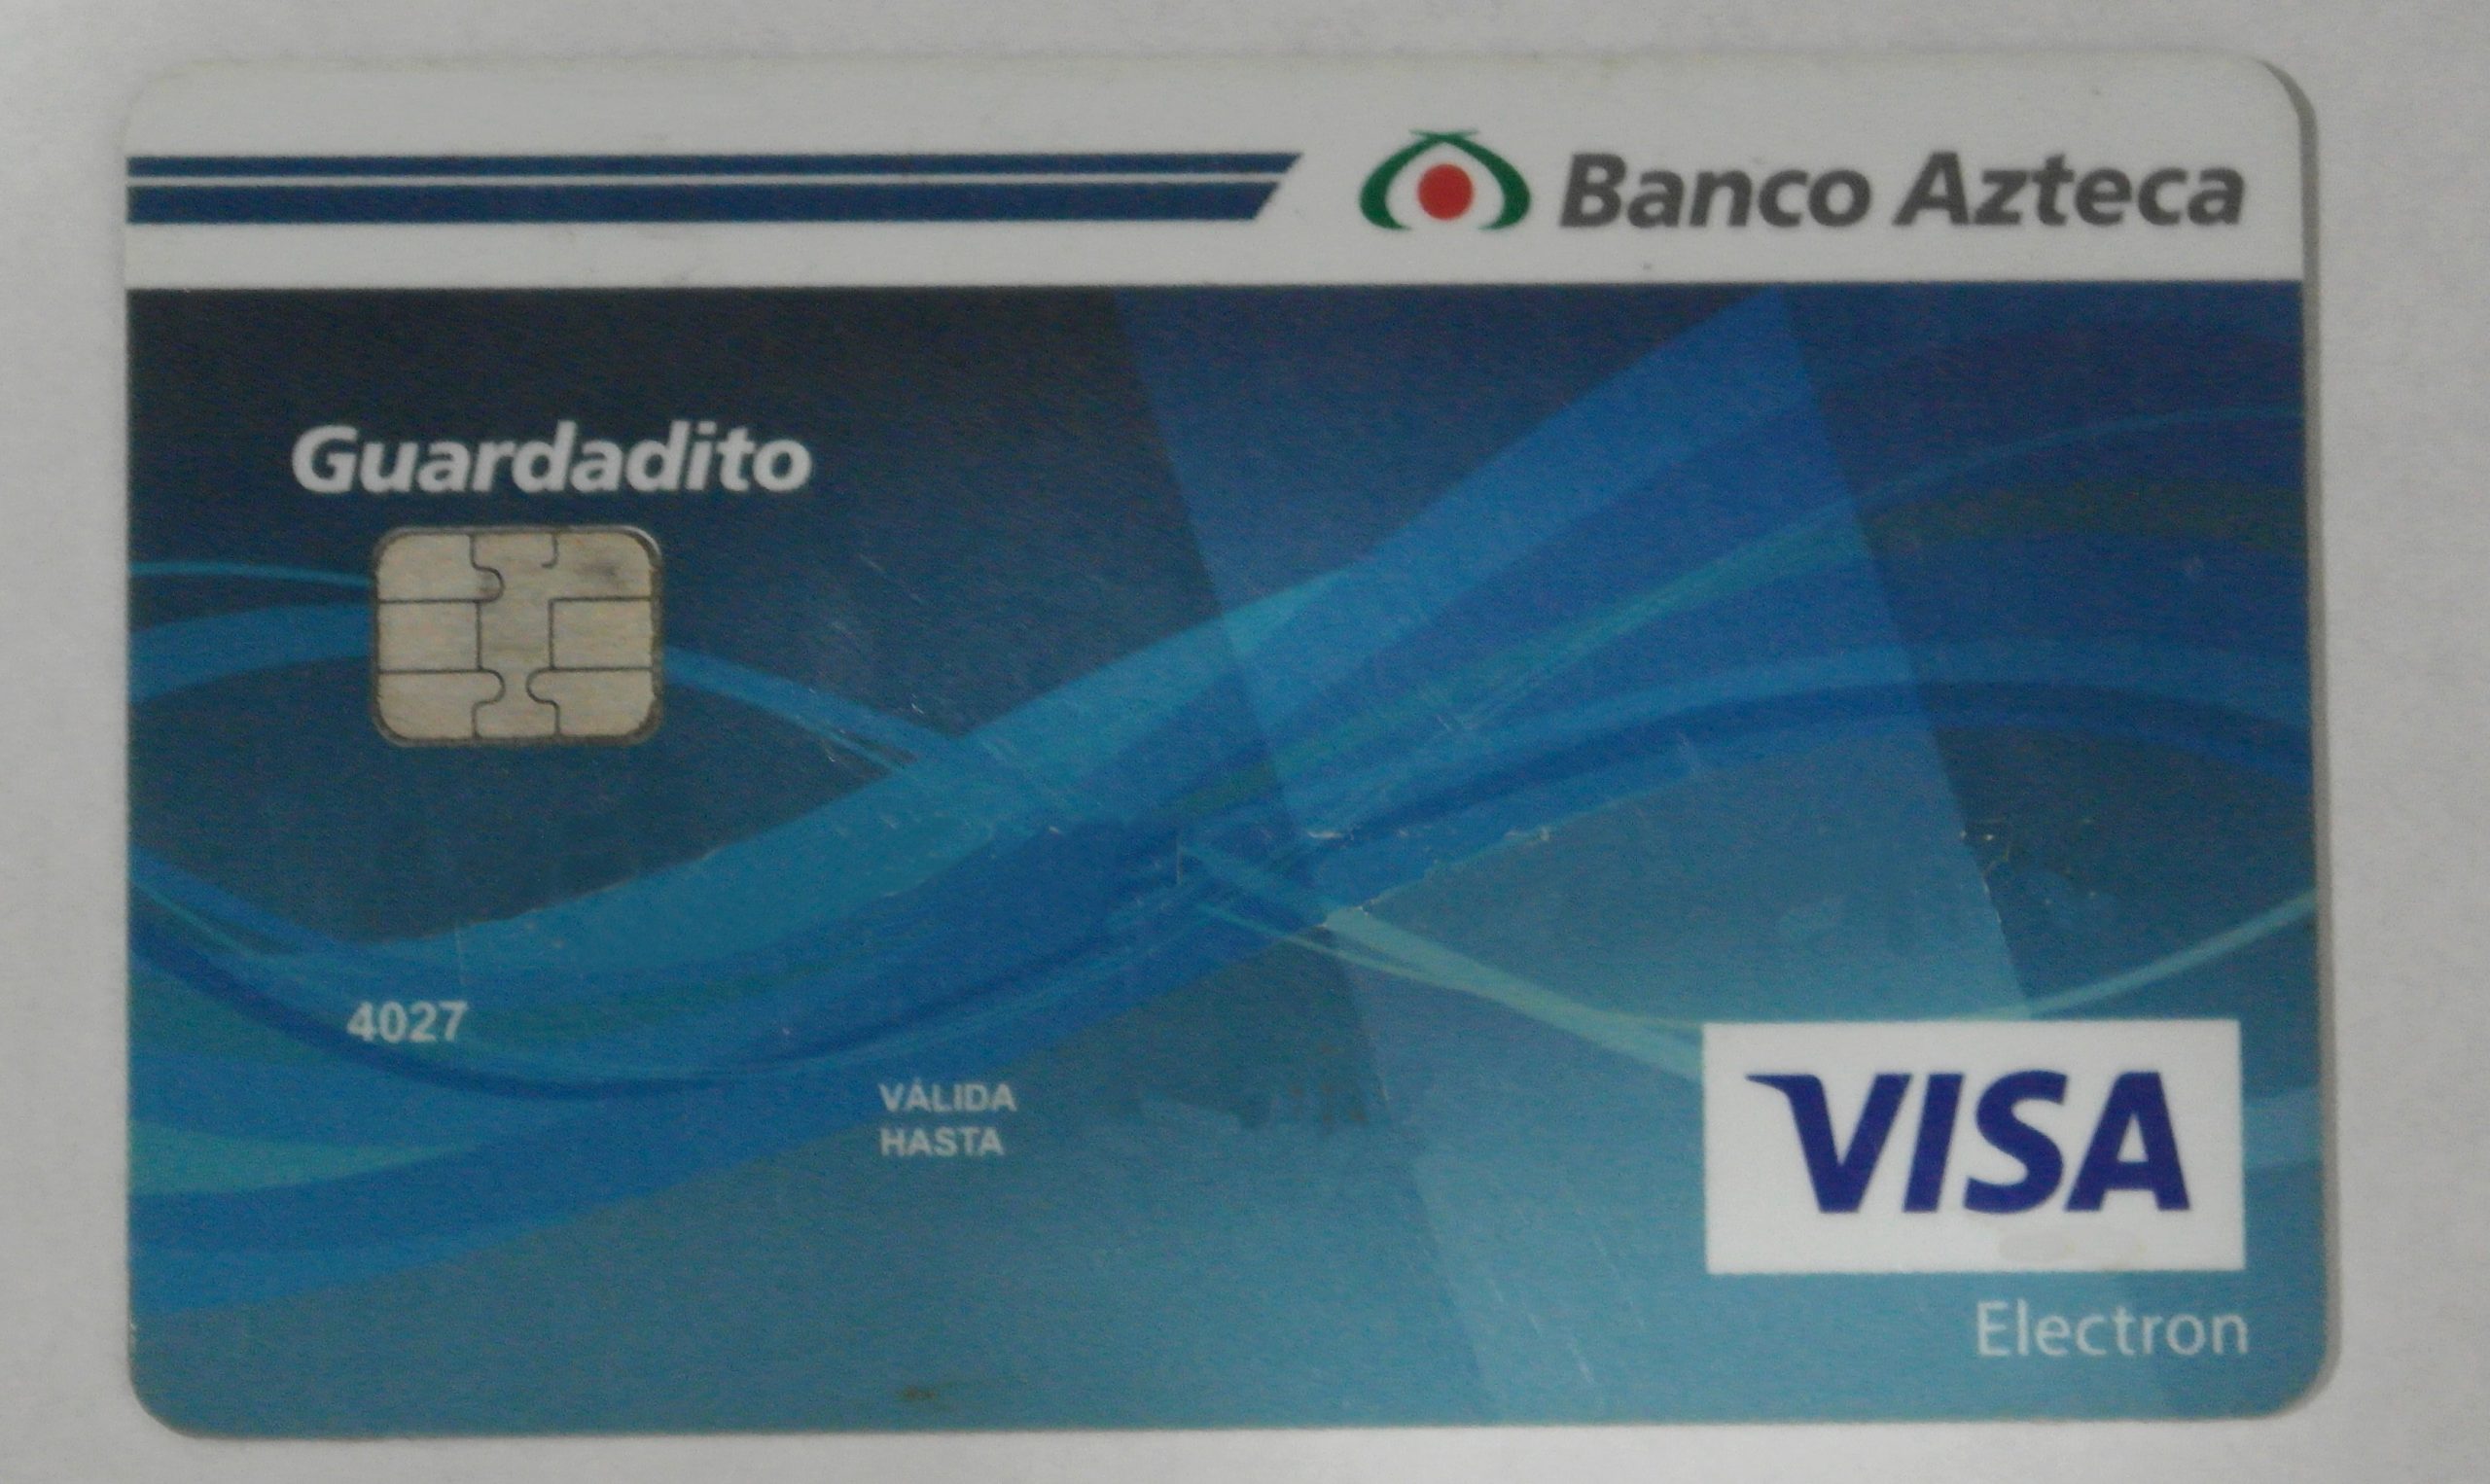 MALA experiencia al aperturar mi tarjeta GUARDADITO en Banco Azteca